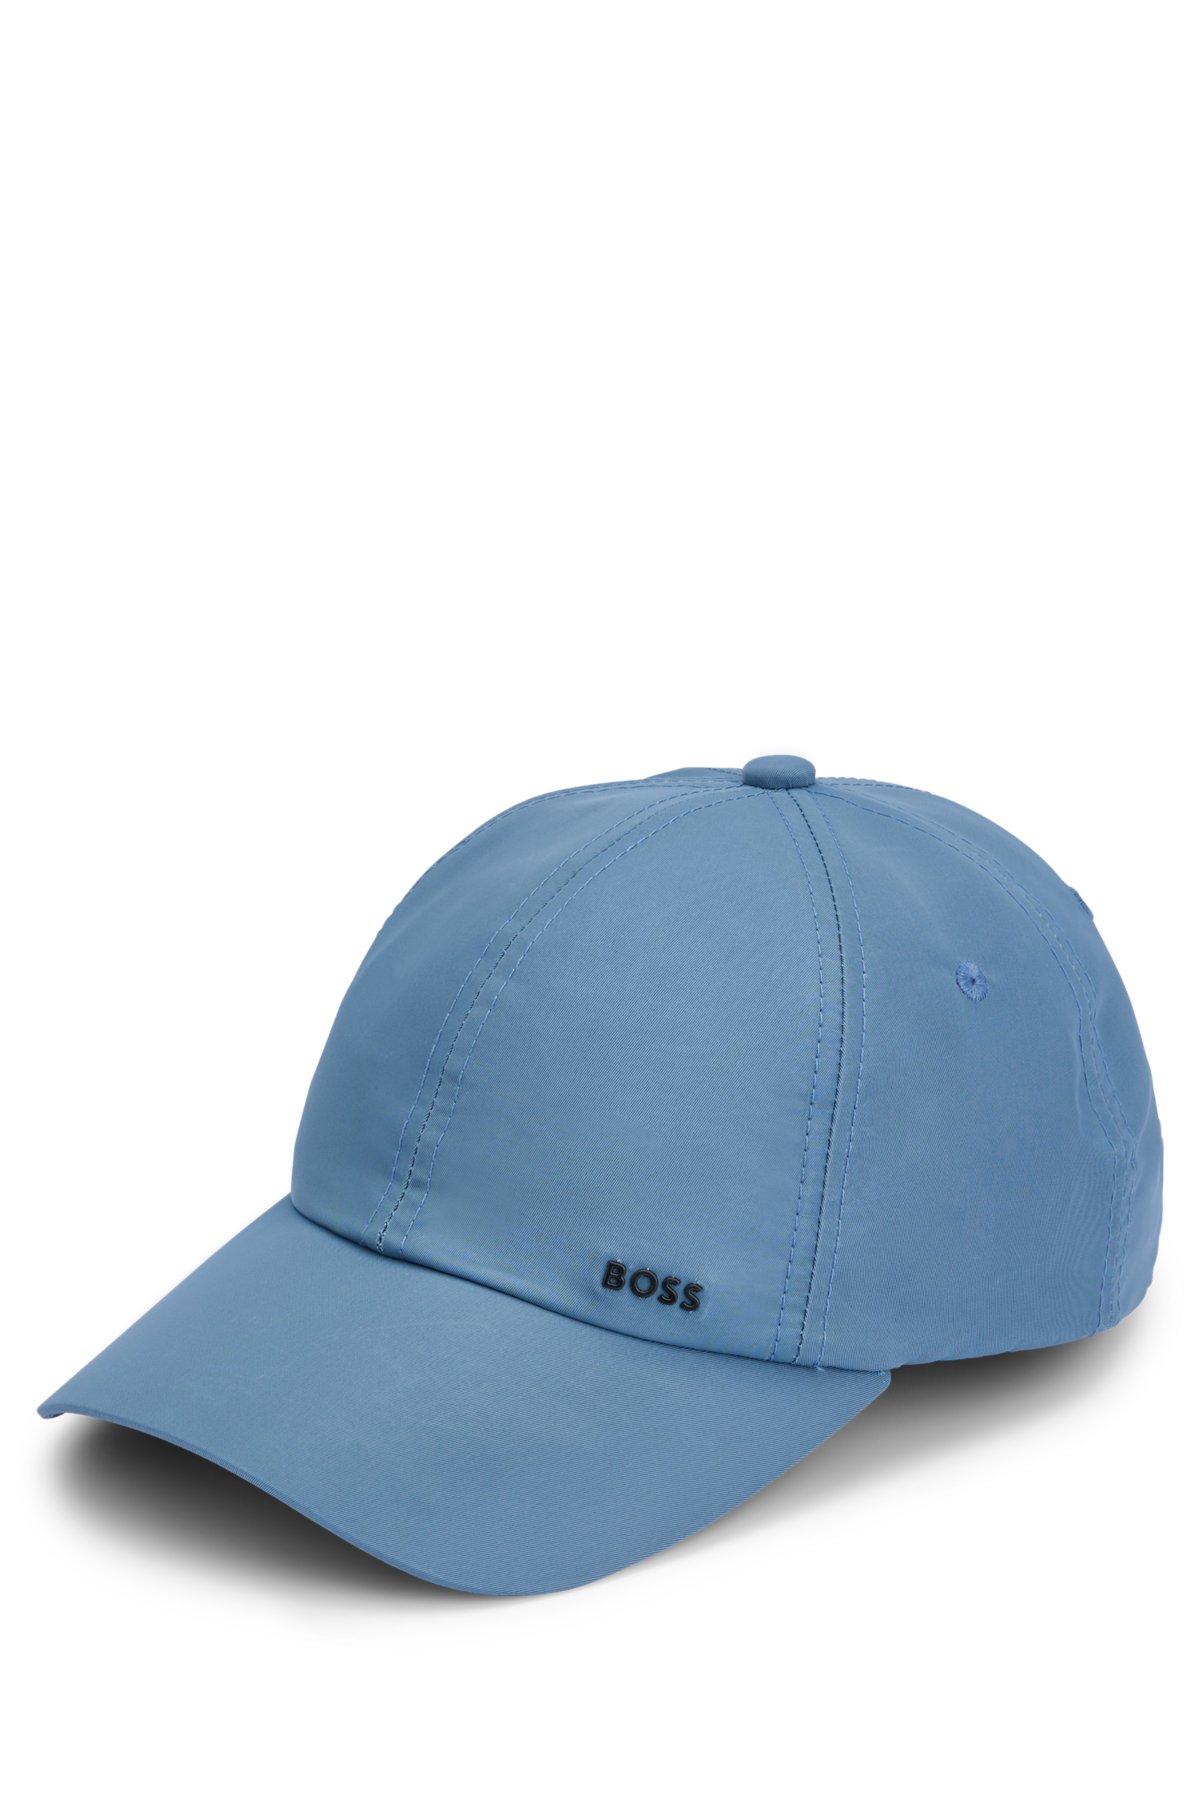 New Hugo Boss Black Label Men Unisex Baseball Cap Hat Big Blue